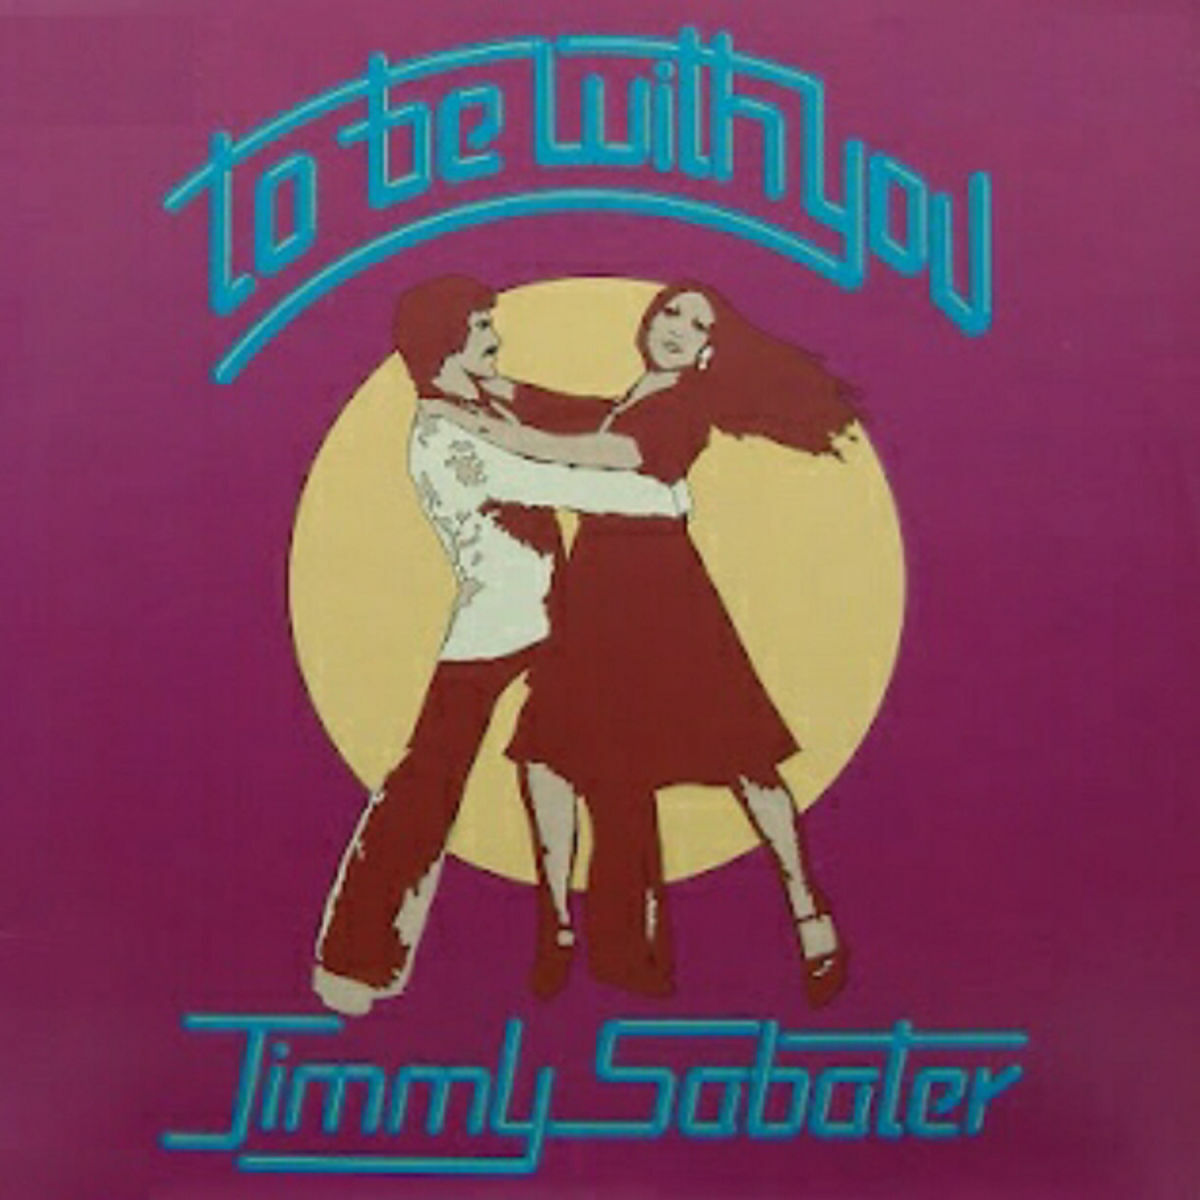 Jimmy Sabater: albums, songs, playlists | Listen on Deezer